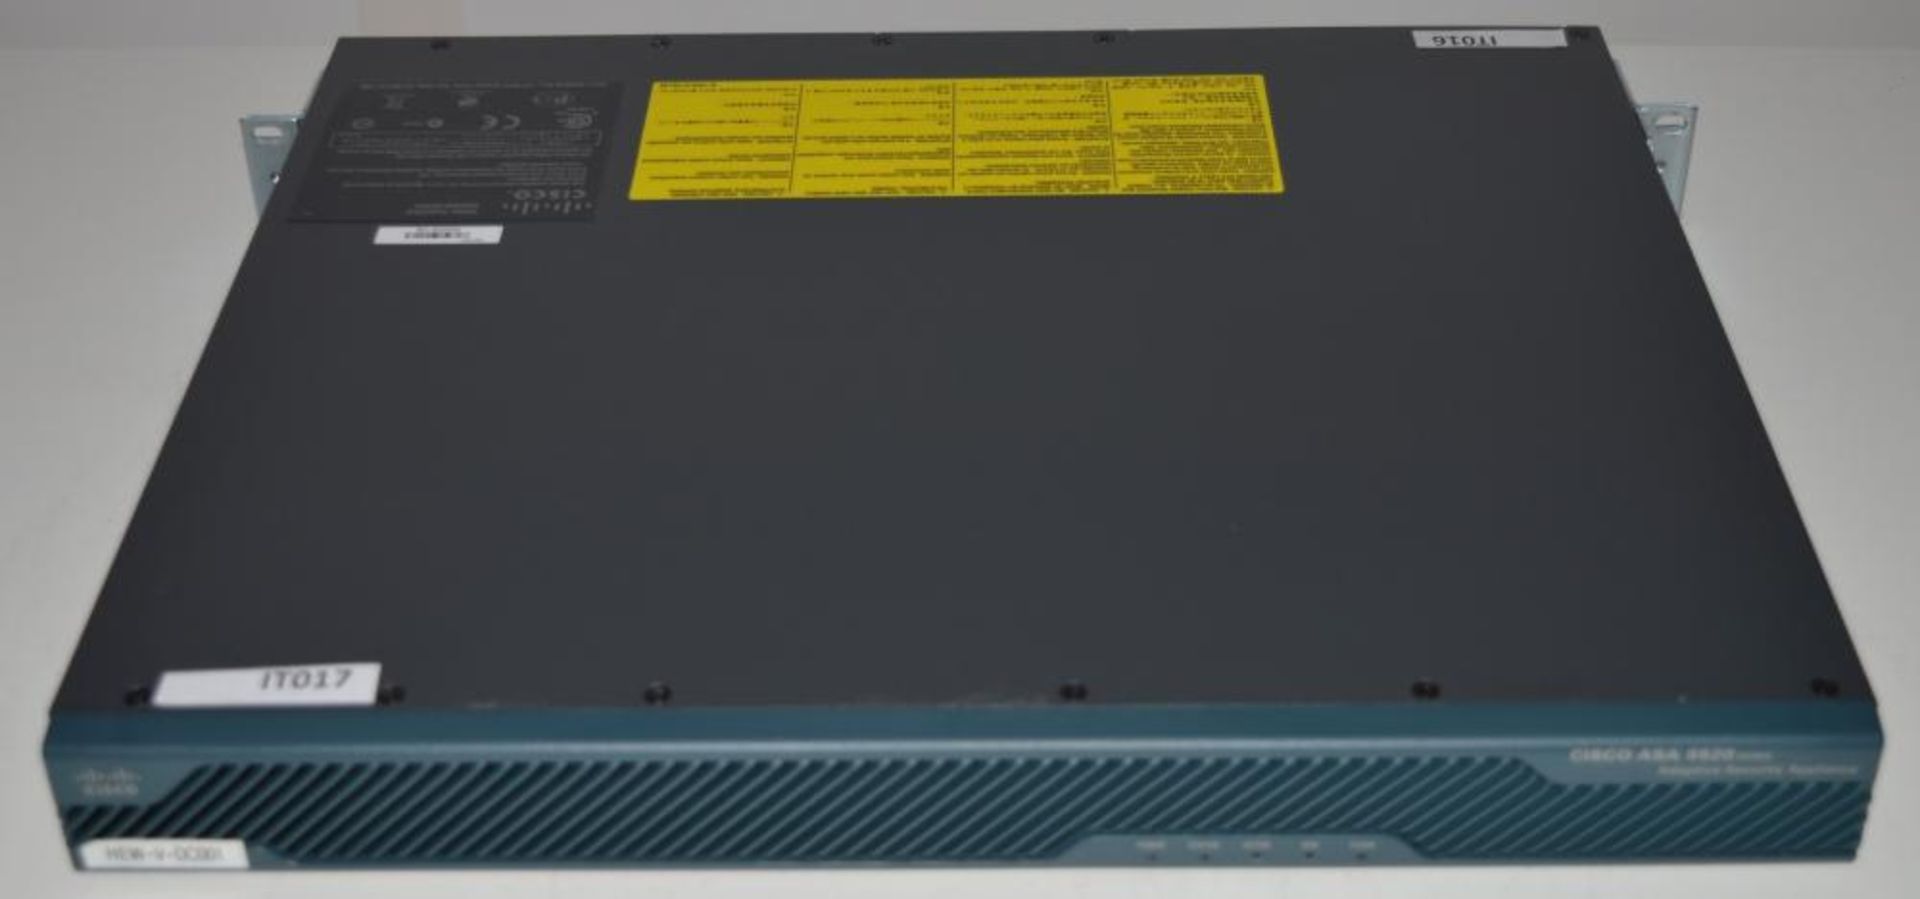 1 x Cisco ASA 5520 Adaptive Security Appliance - CL240 - Ref IT017 - Location: Altrincham WA14<B